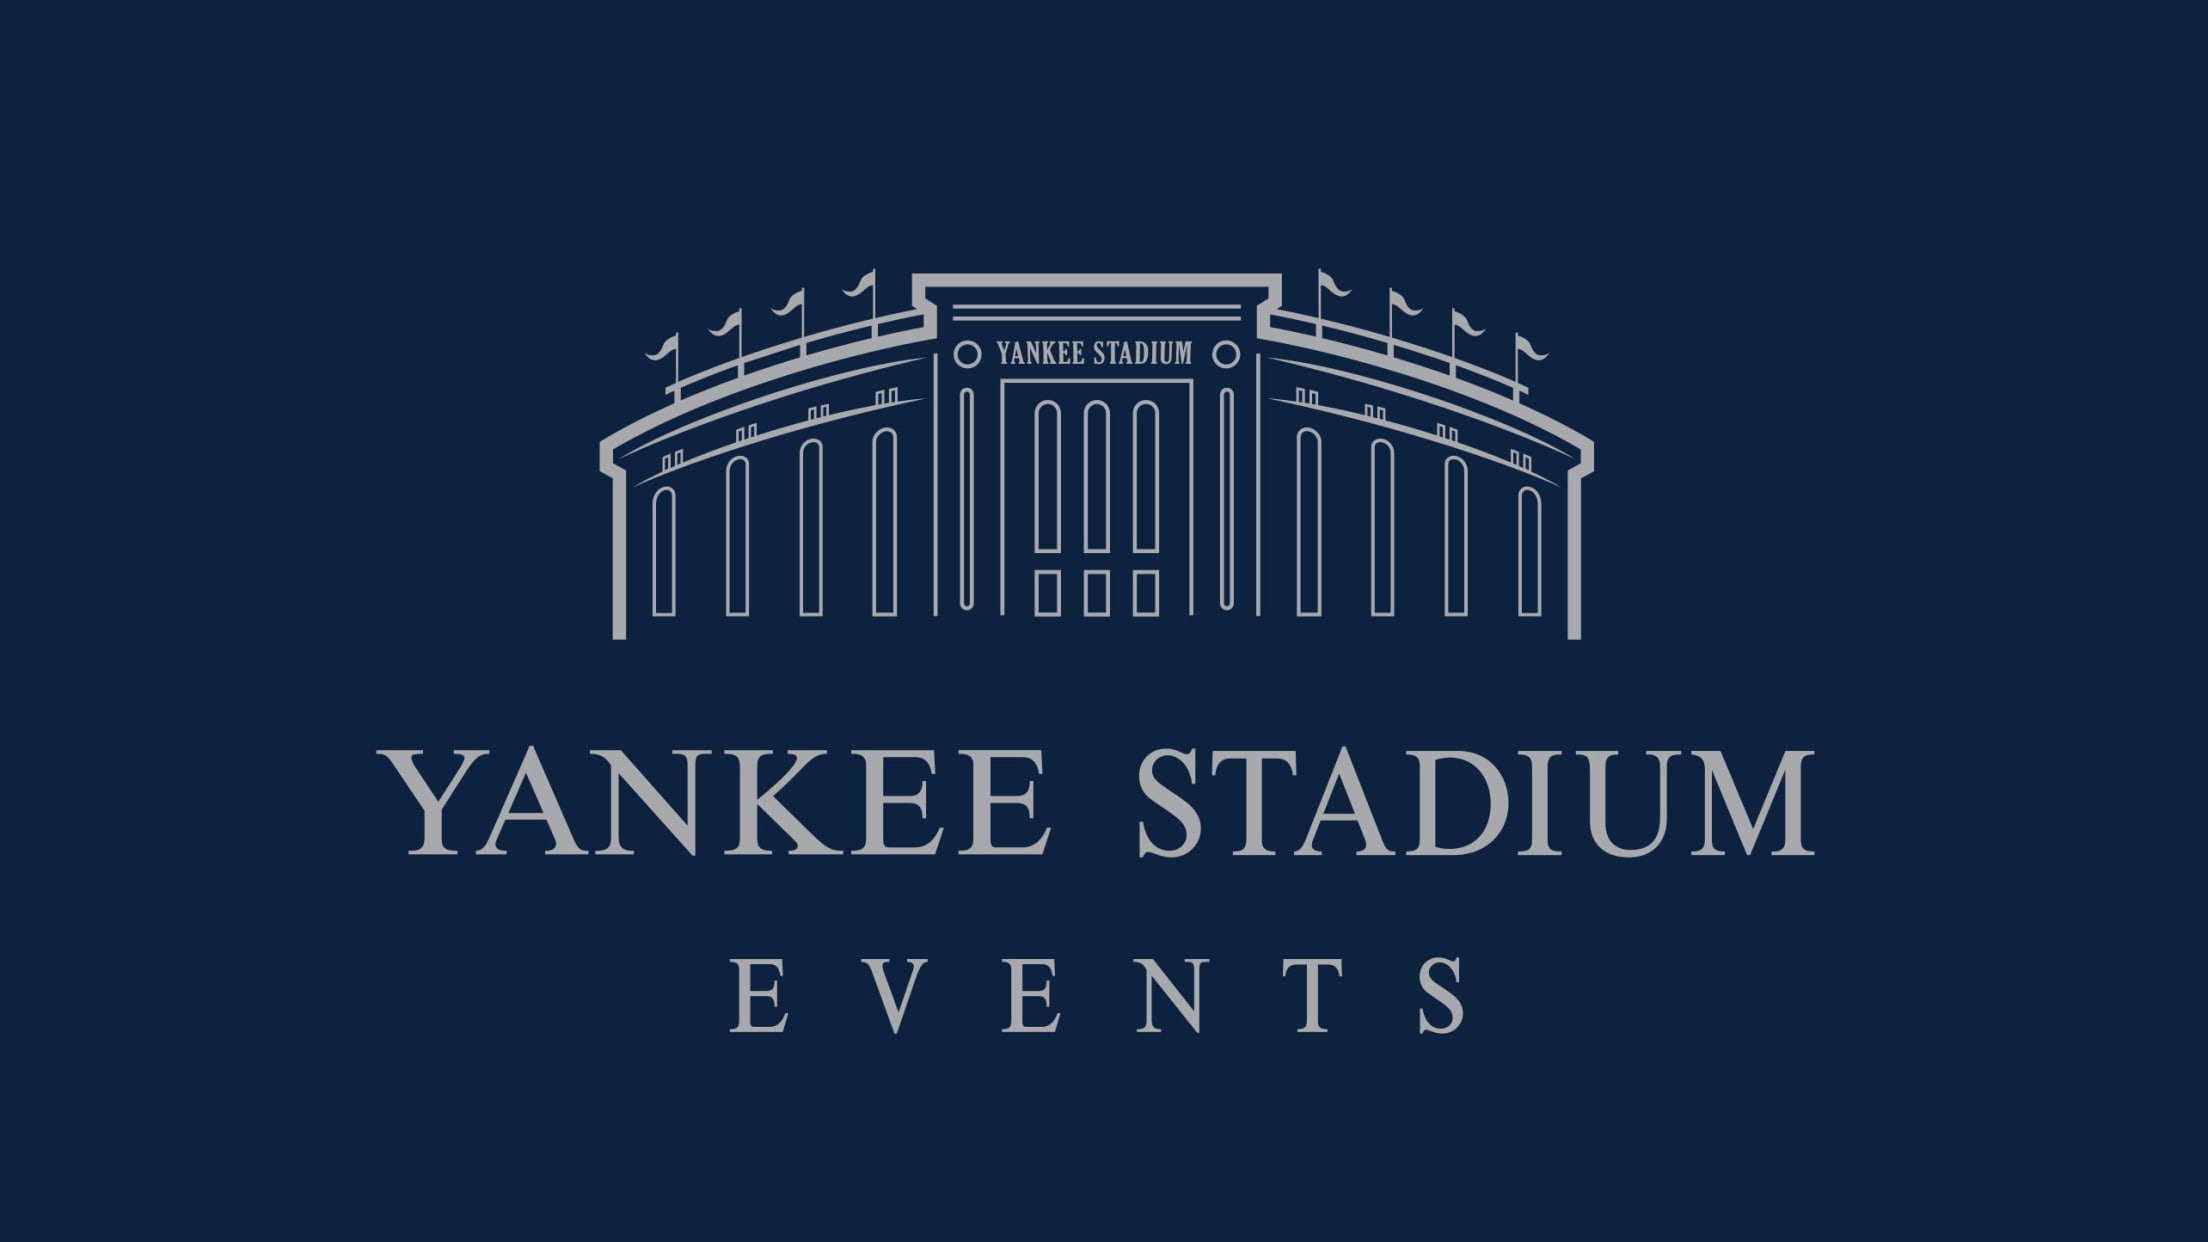 YANKEE STADIUM – Sports And The Arts